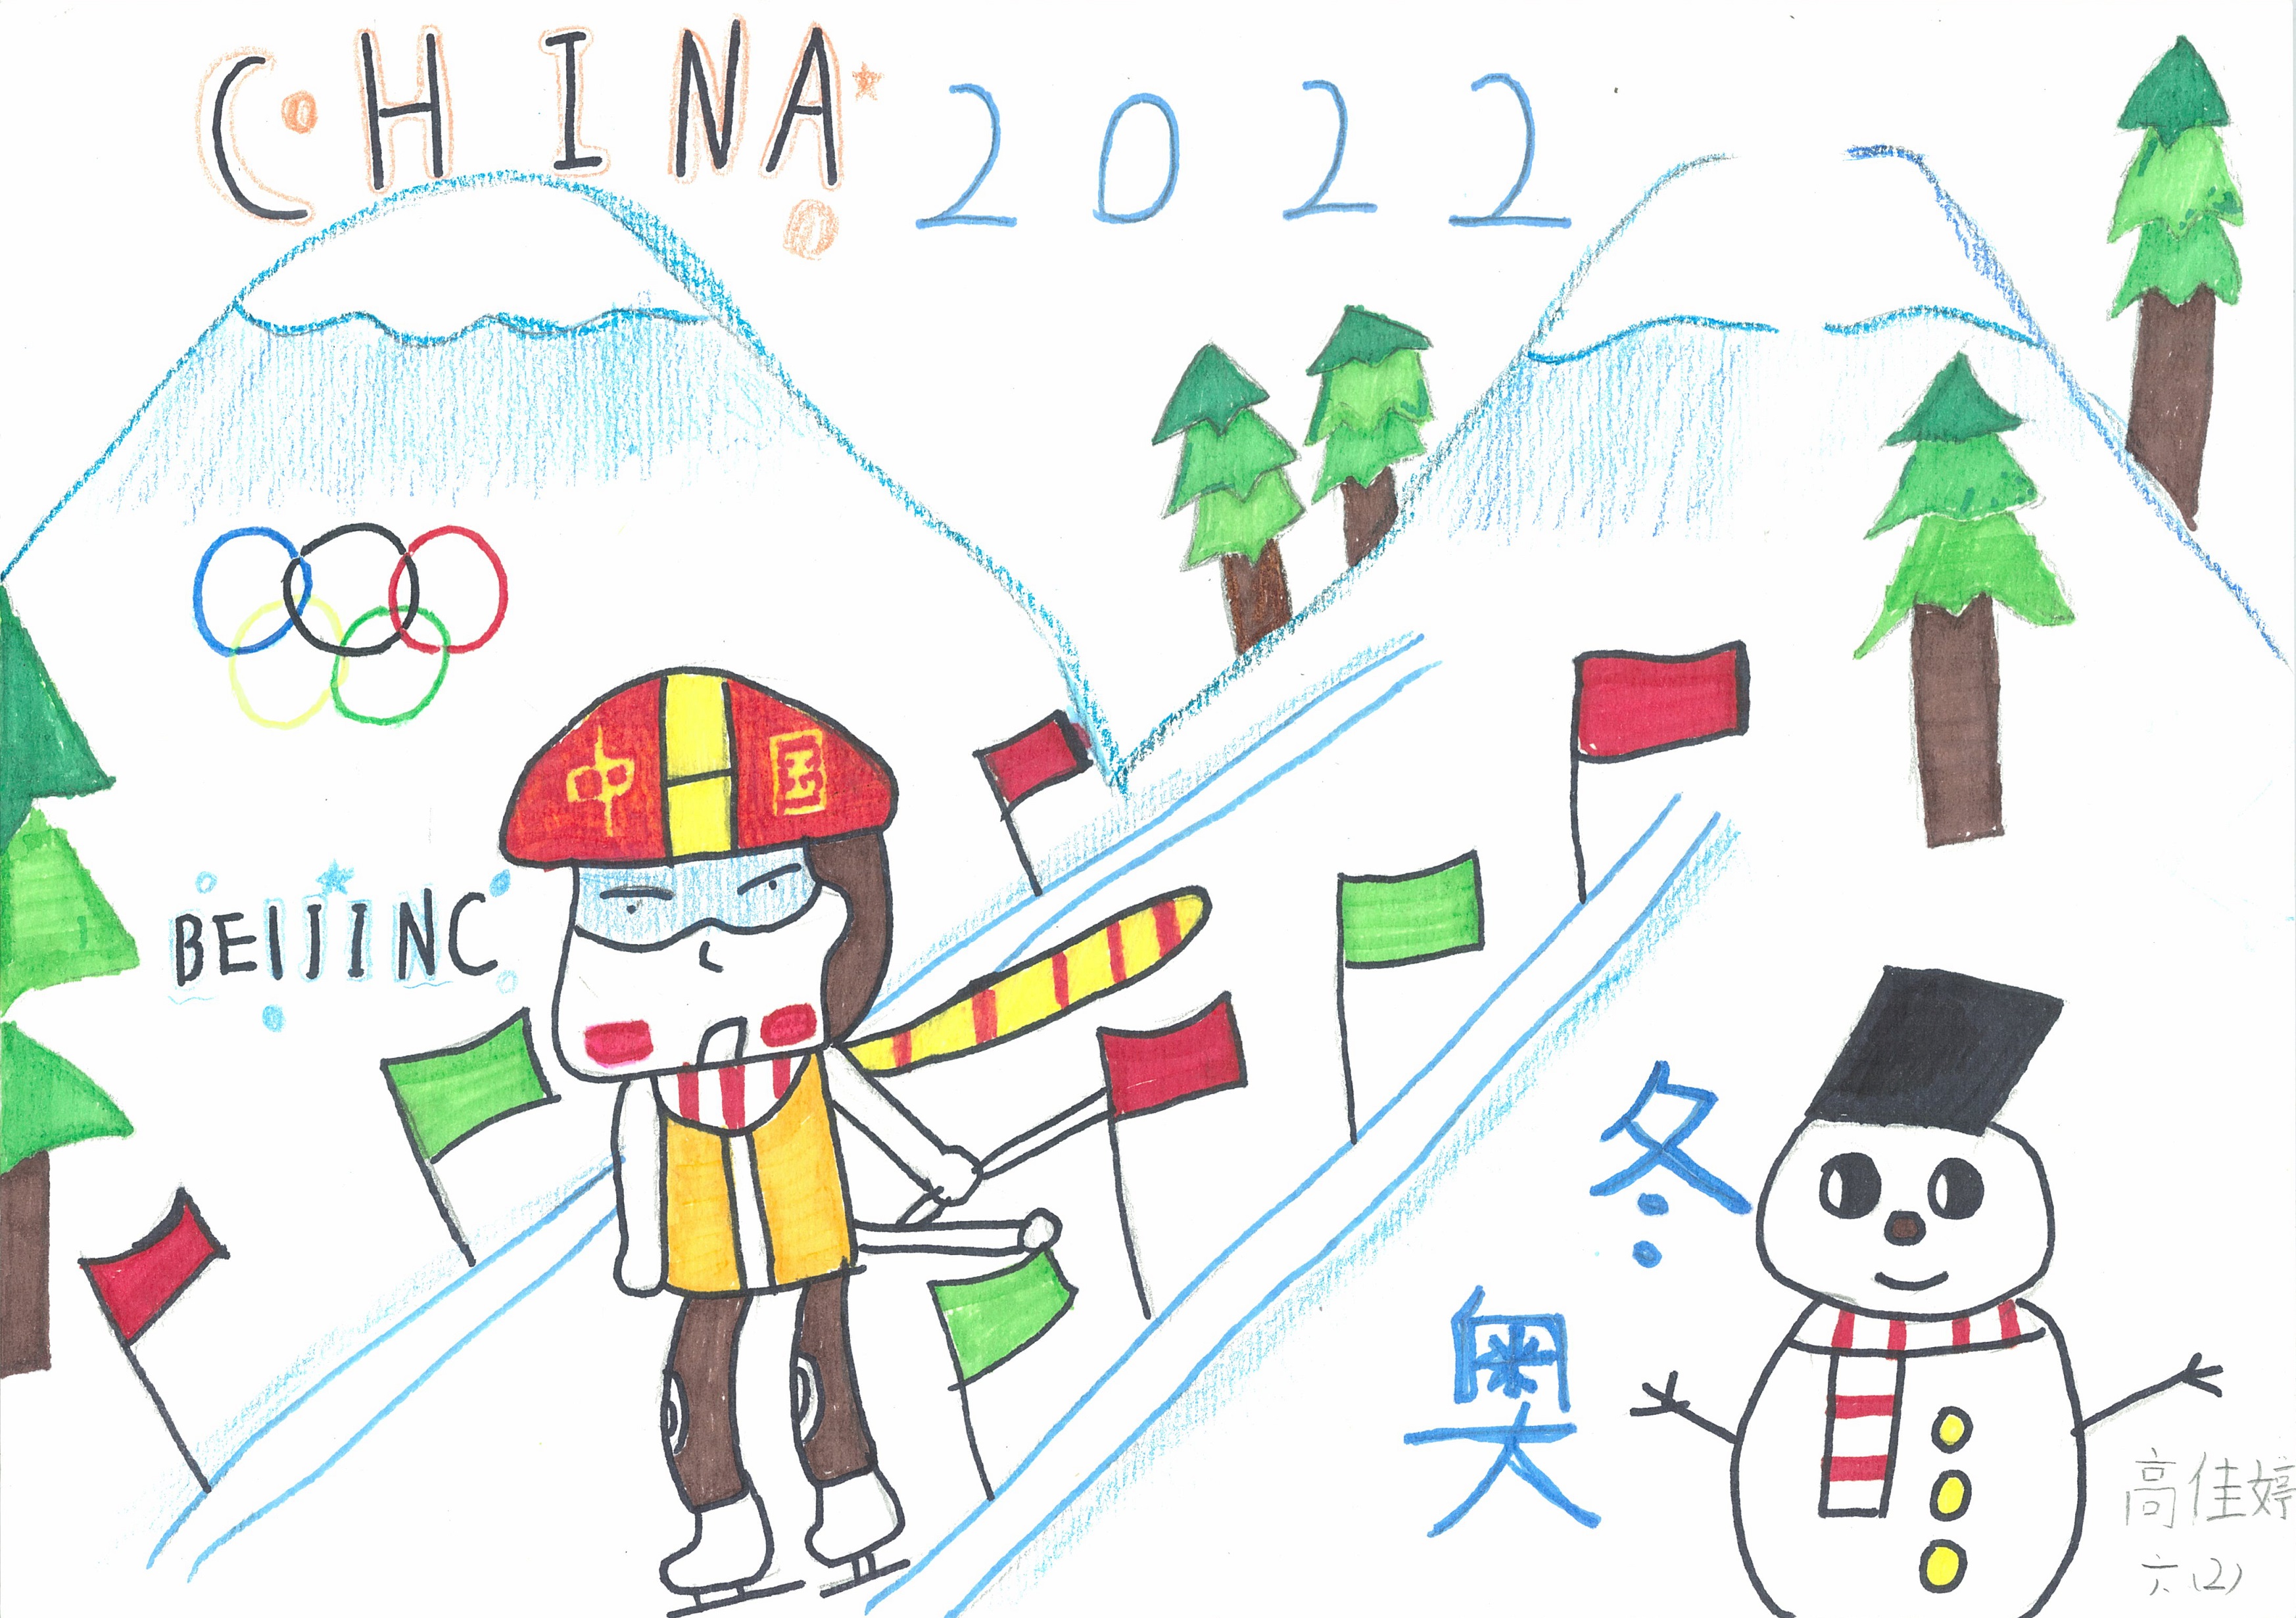 《我心中的冬奥荣耀时刻》Glory moments of the Winter Olympics in my heart +高佳婷 Gao Jiatin